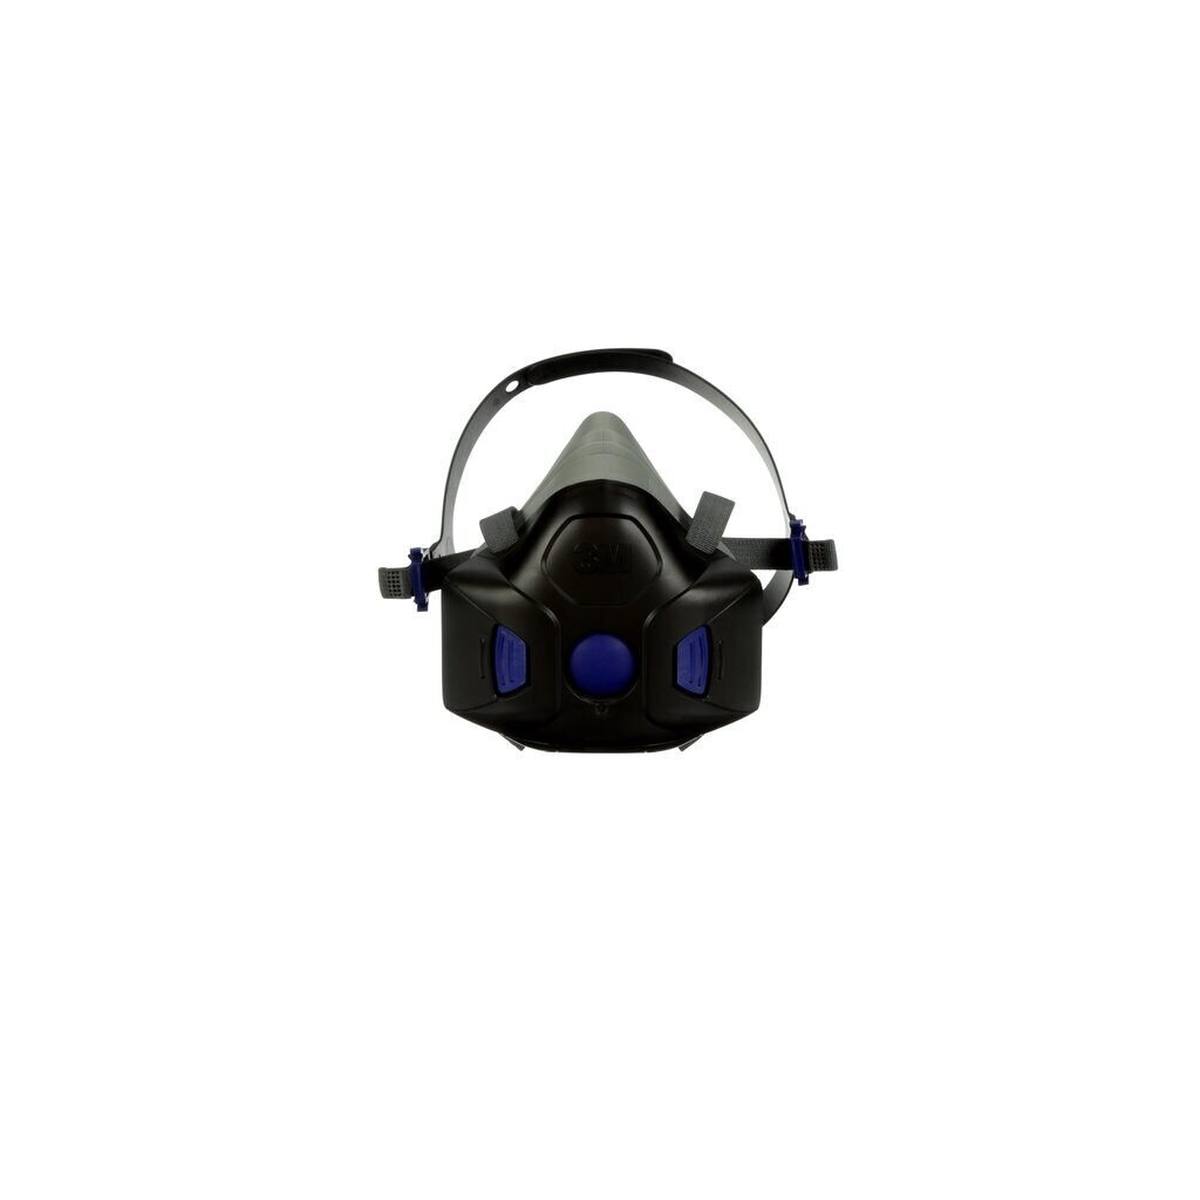 3M Secure Click media máscara HF-802 Slikon talla M